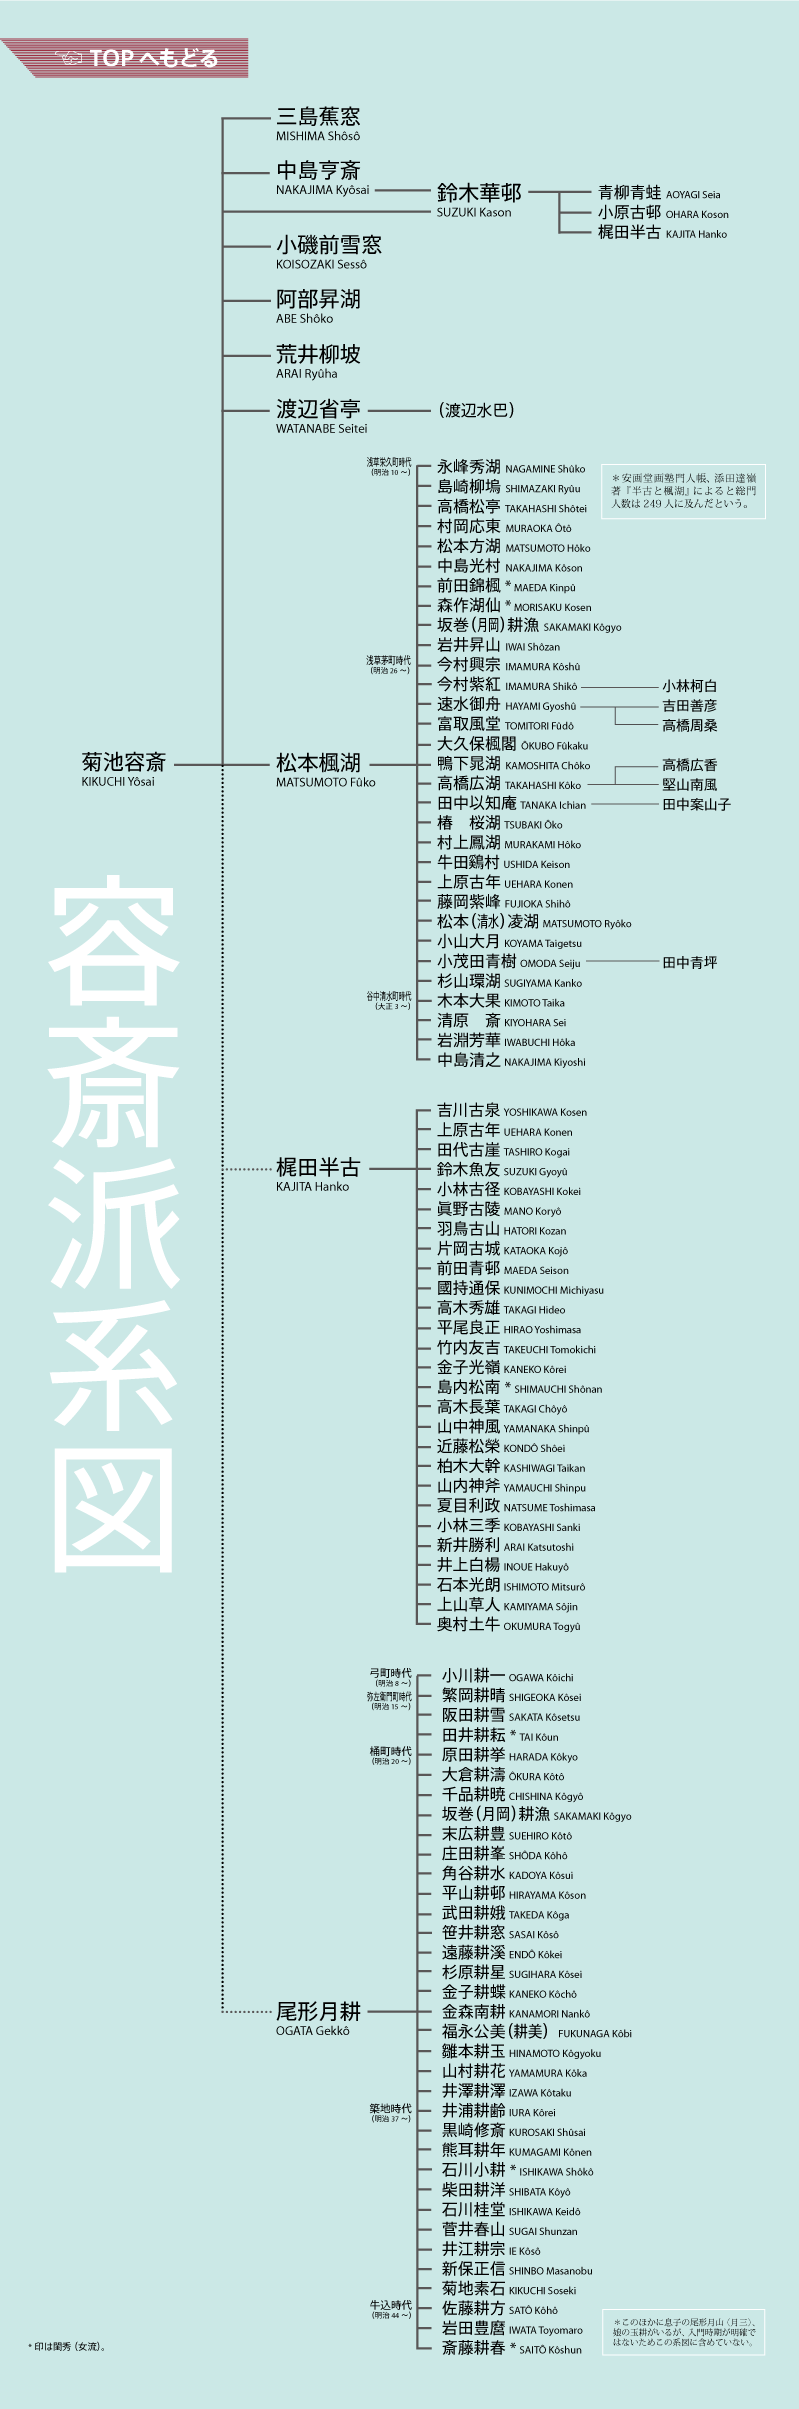 容斎派系図　Yosai school genealogy　サイト管理人・堀川浩之 Horikawa Hiroyuki